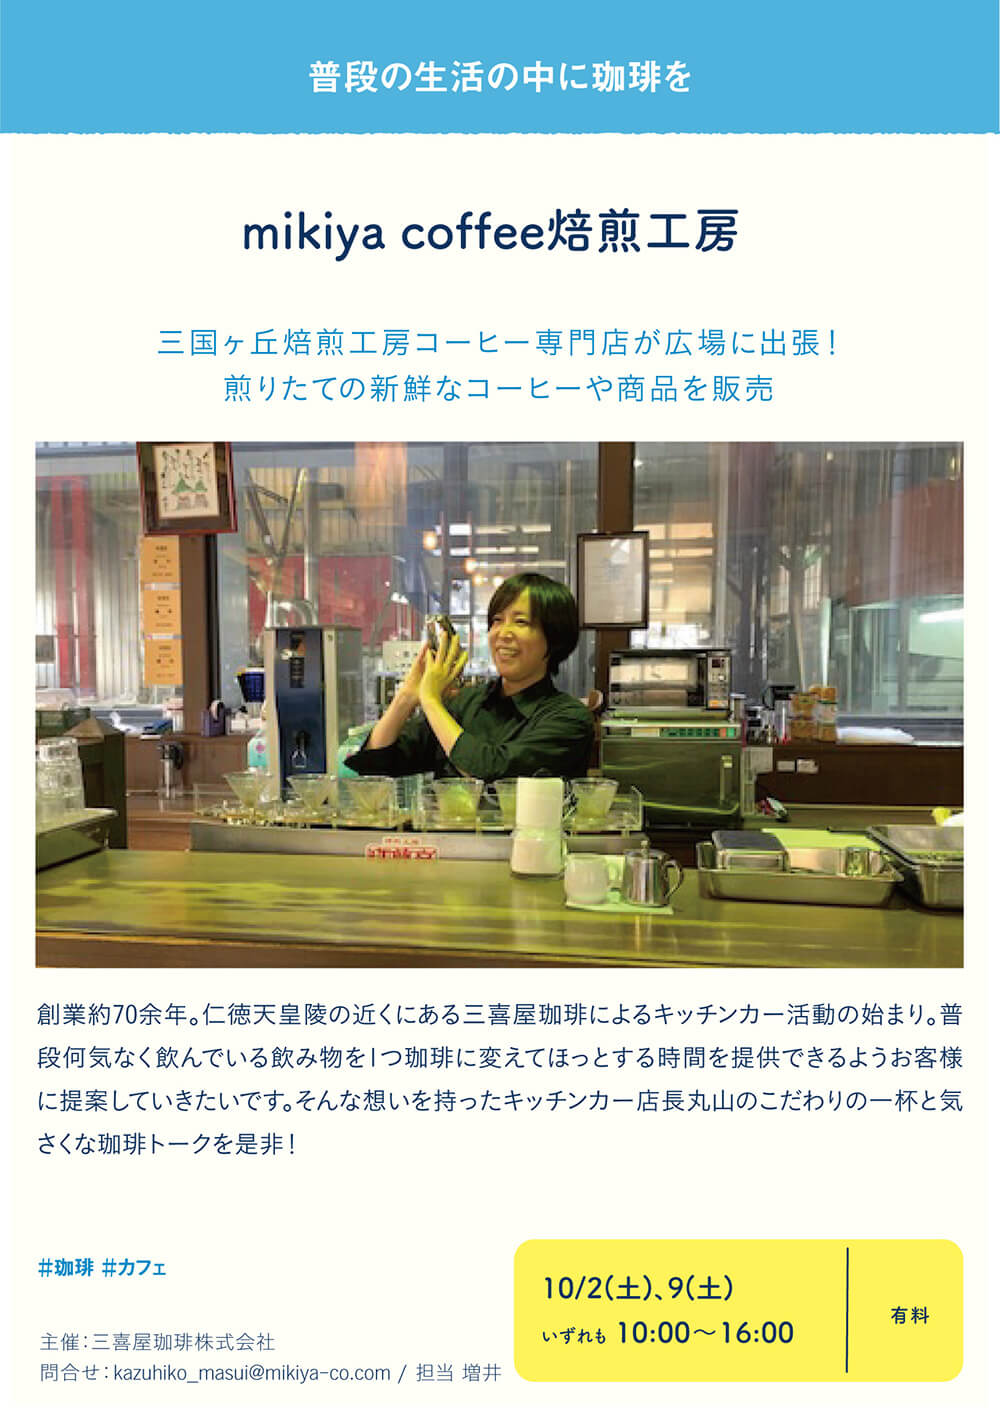 mikiya coffee 焙煎工房